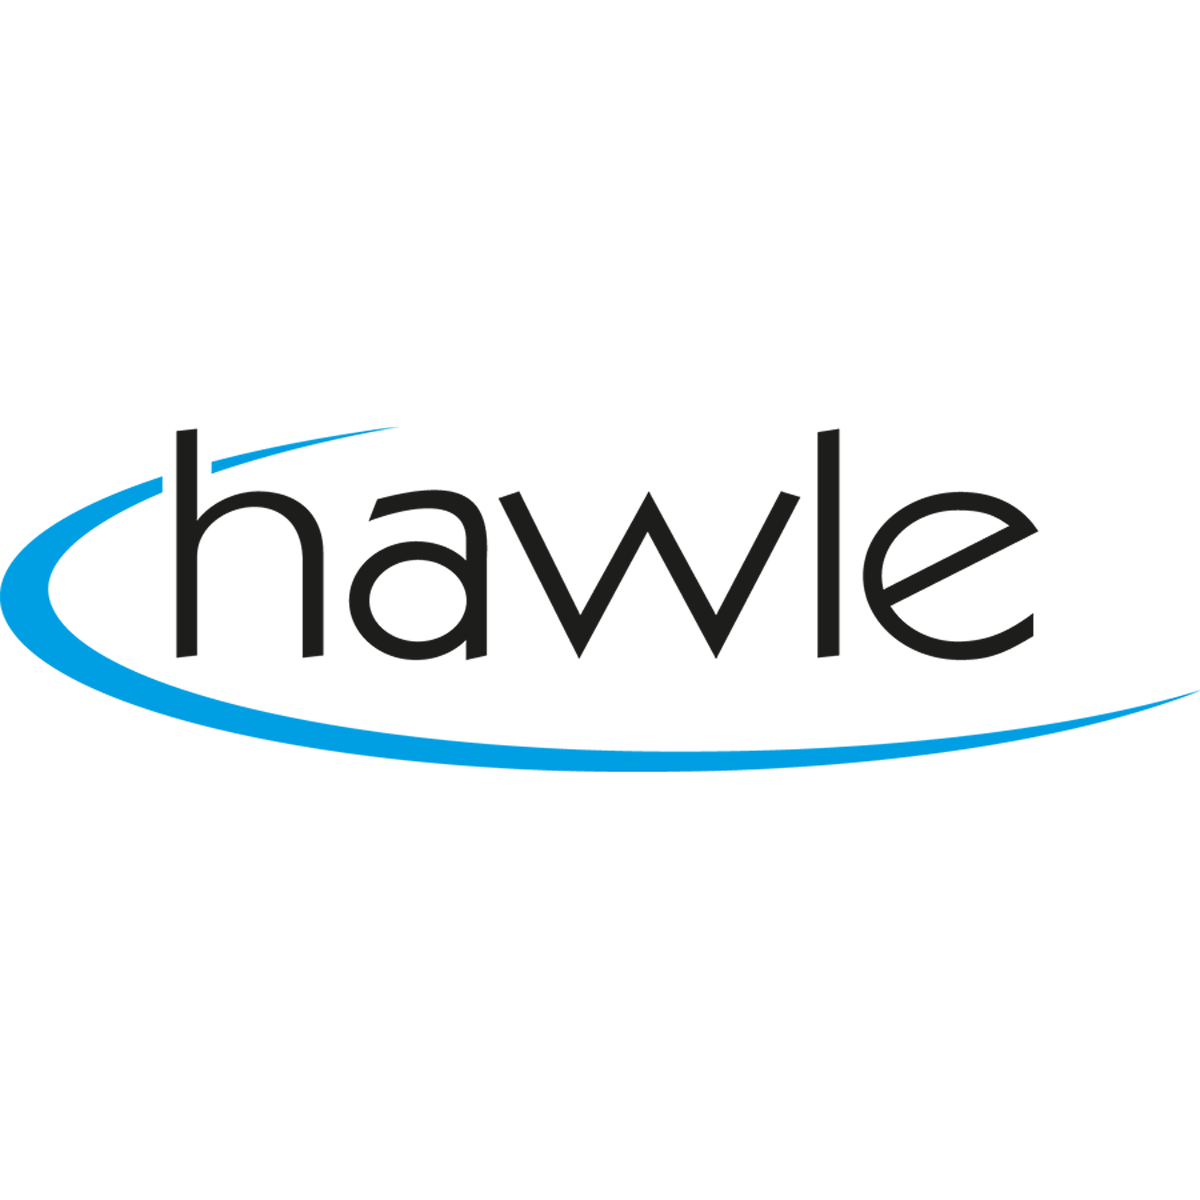 Hawle Armaturen GmbH Logo